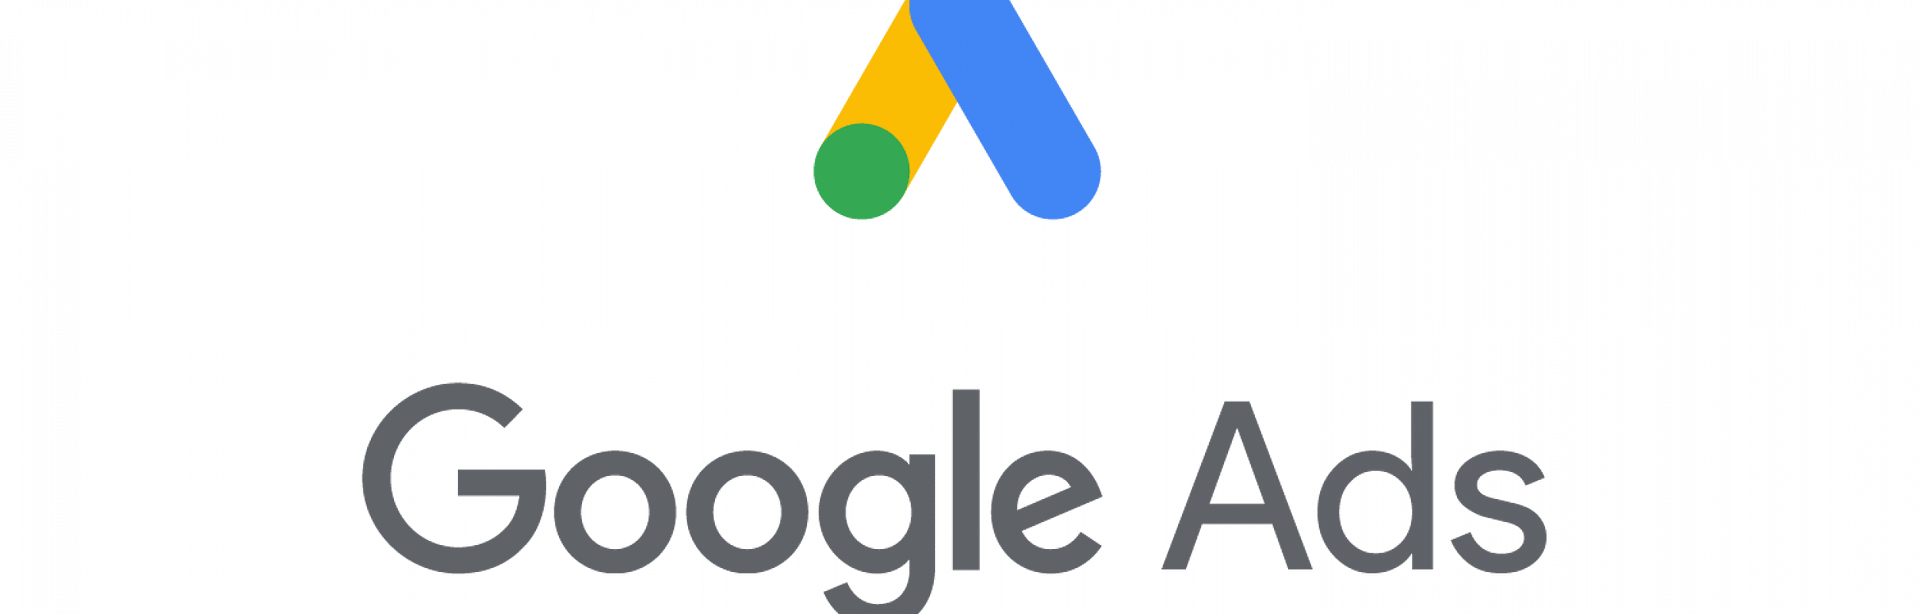 ads-logo-vertical